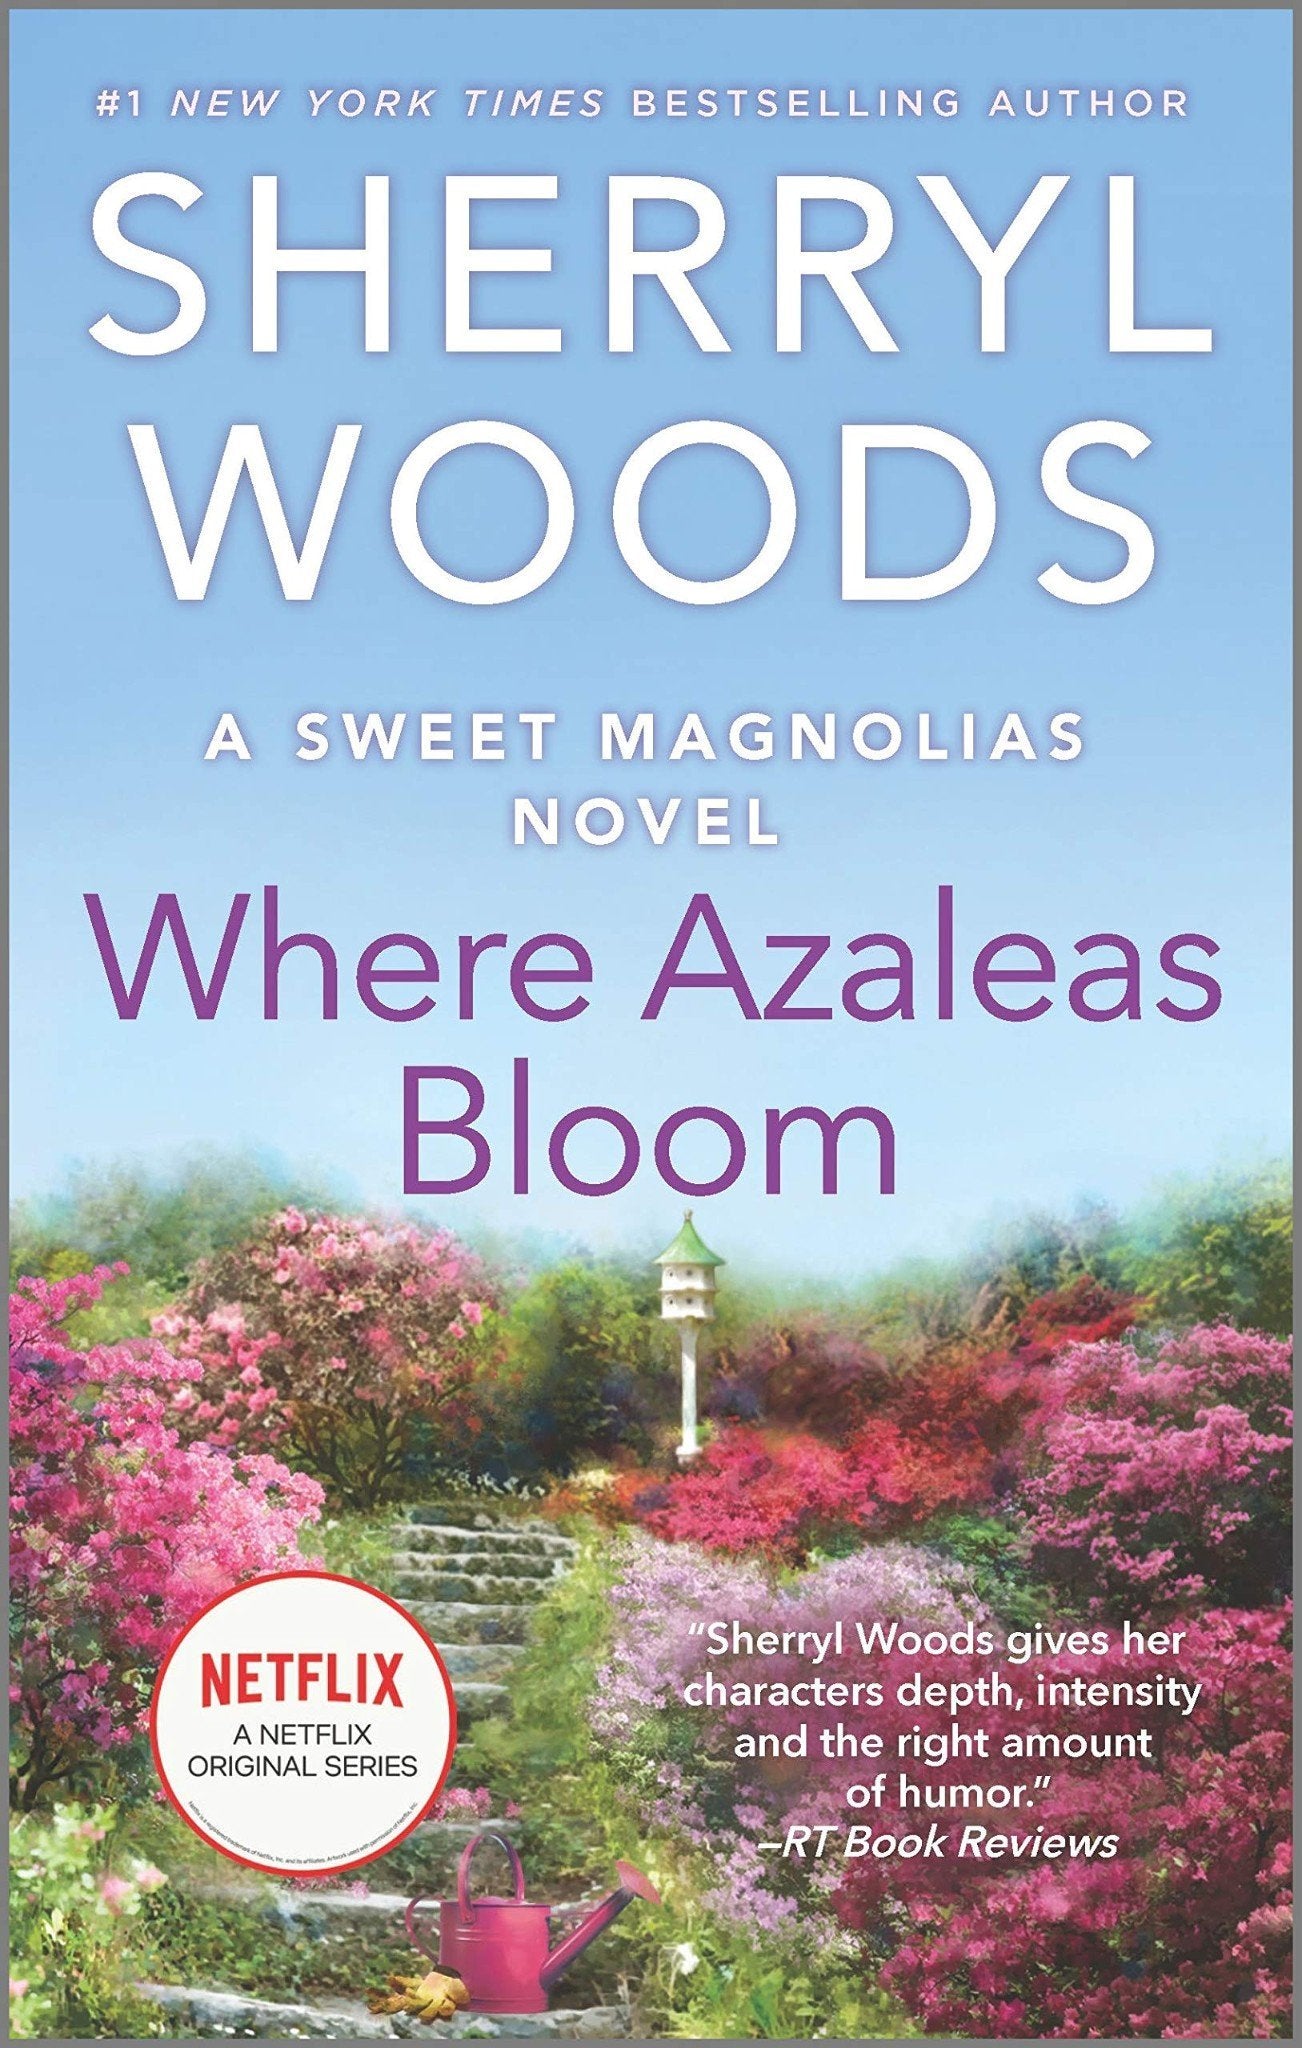 Where Azaleas Bloom by Sherryl Woods - A Sweet Magnolias Novel - LV'S Global Media